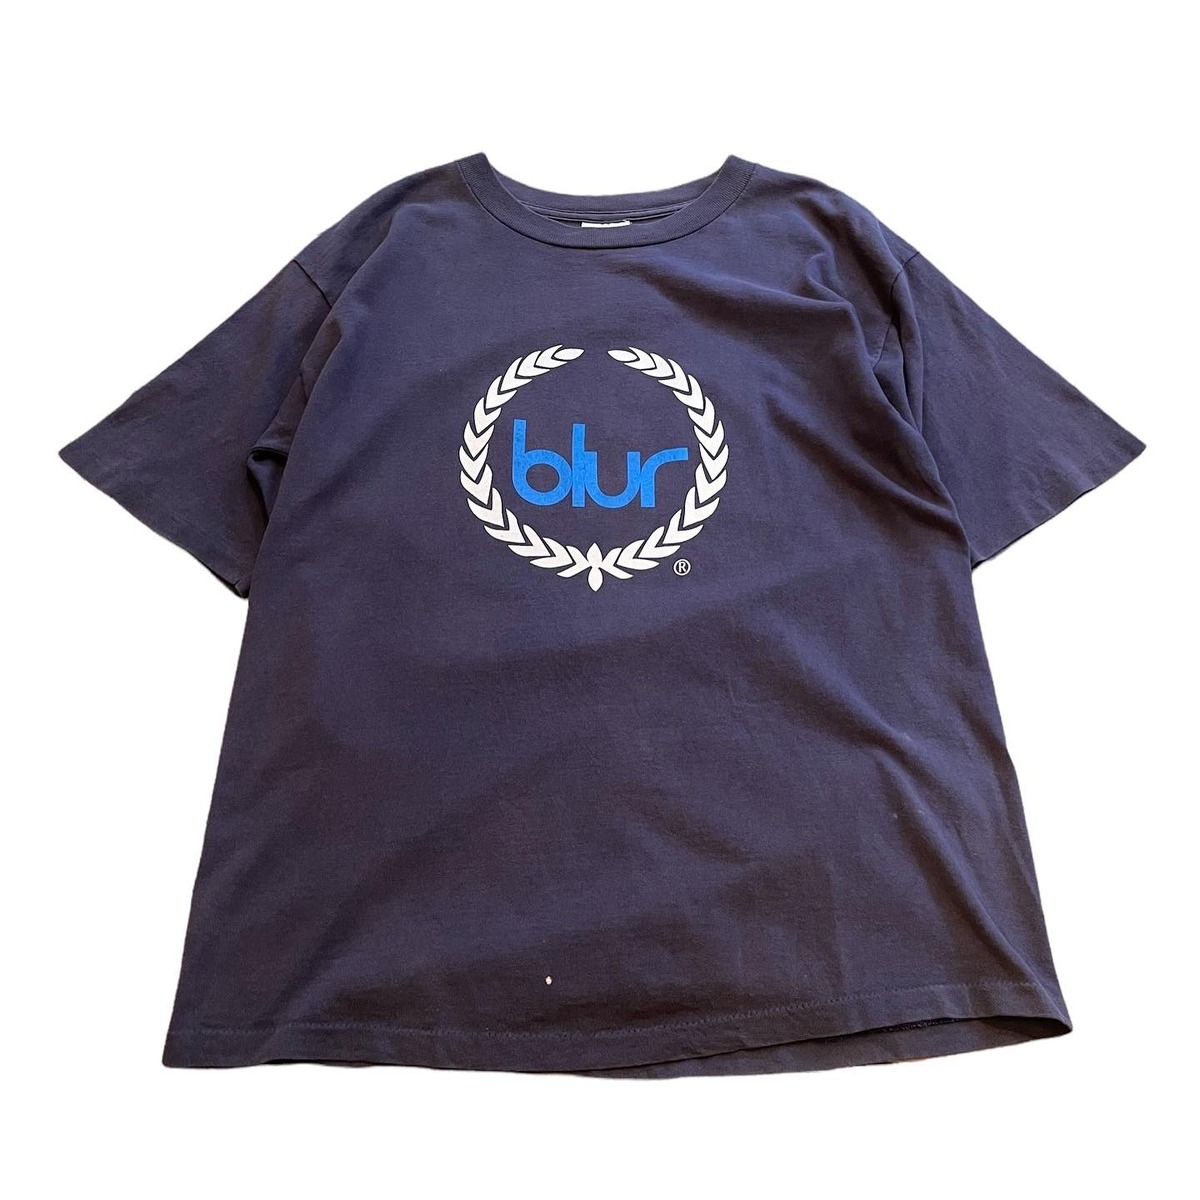 90s blur t-shirt | What'z up